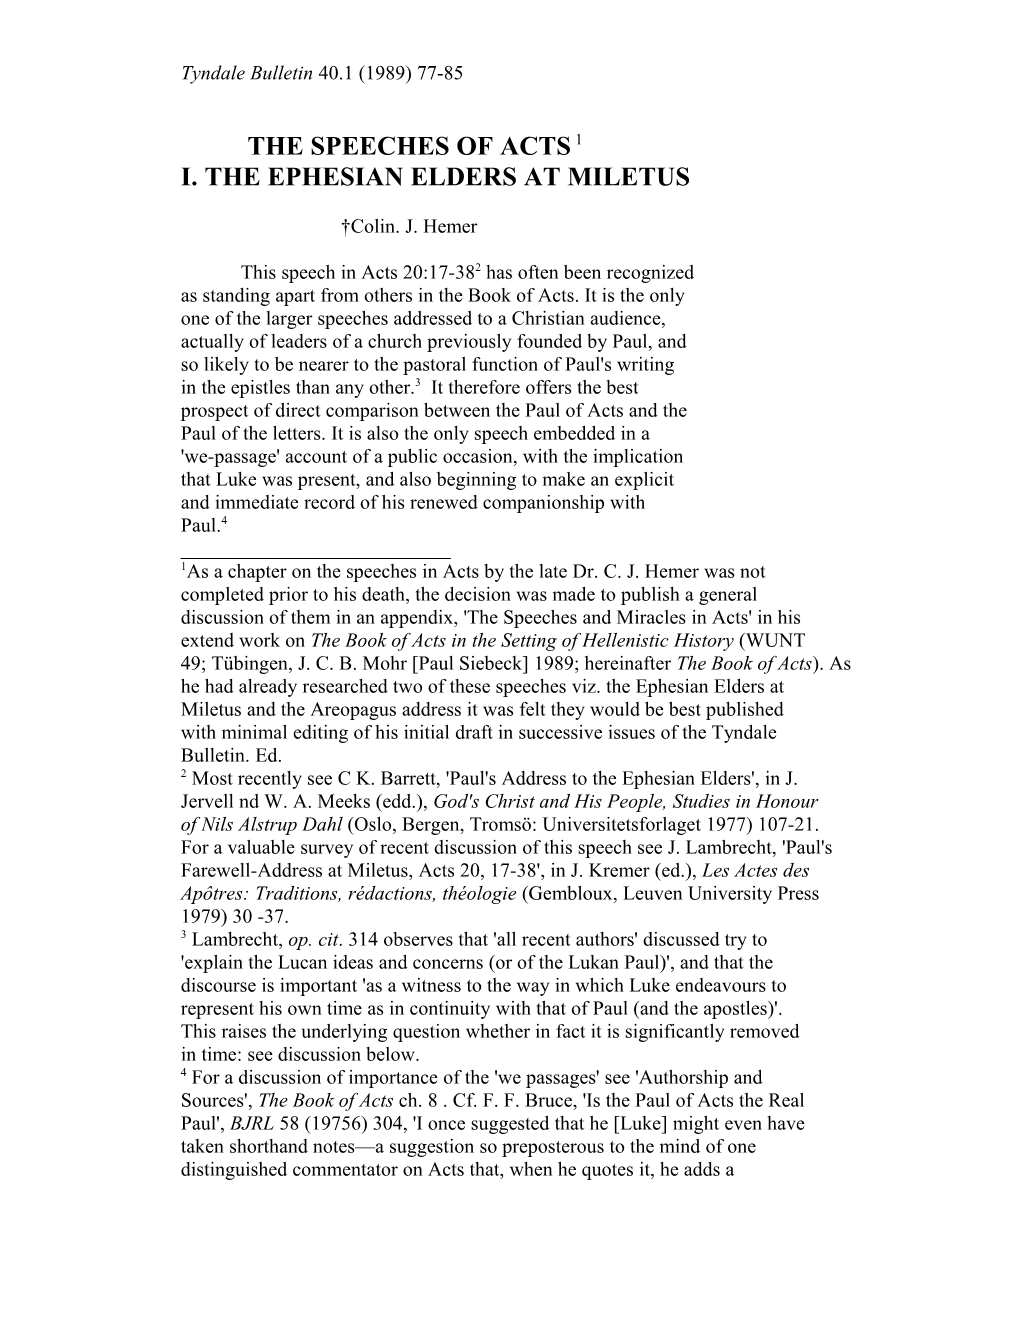 I. the Ephesian Elders at Miletus